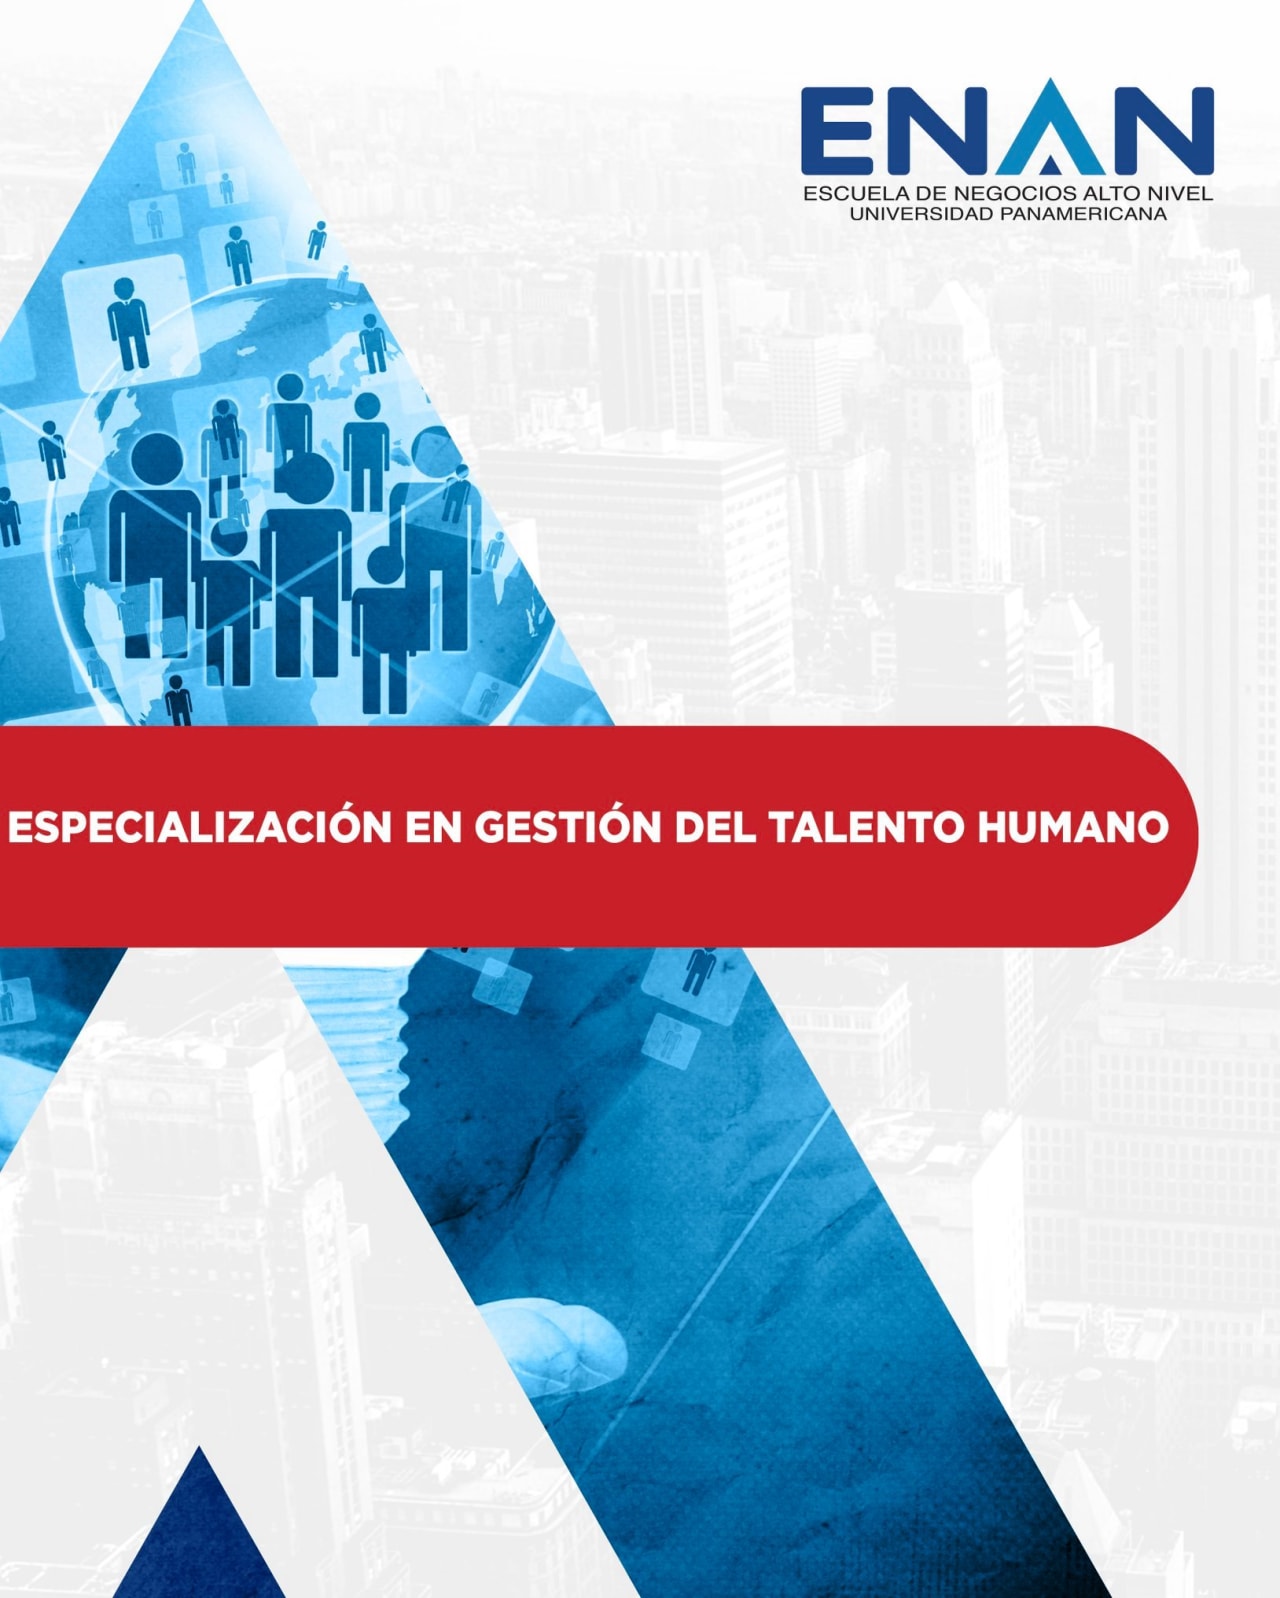 Escuela de Negocios Alto Nivel - Universidad Panamericana de Guatemala Specialization in Human Talent Management